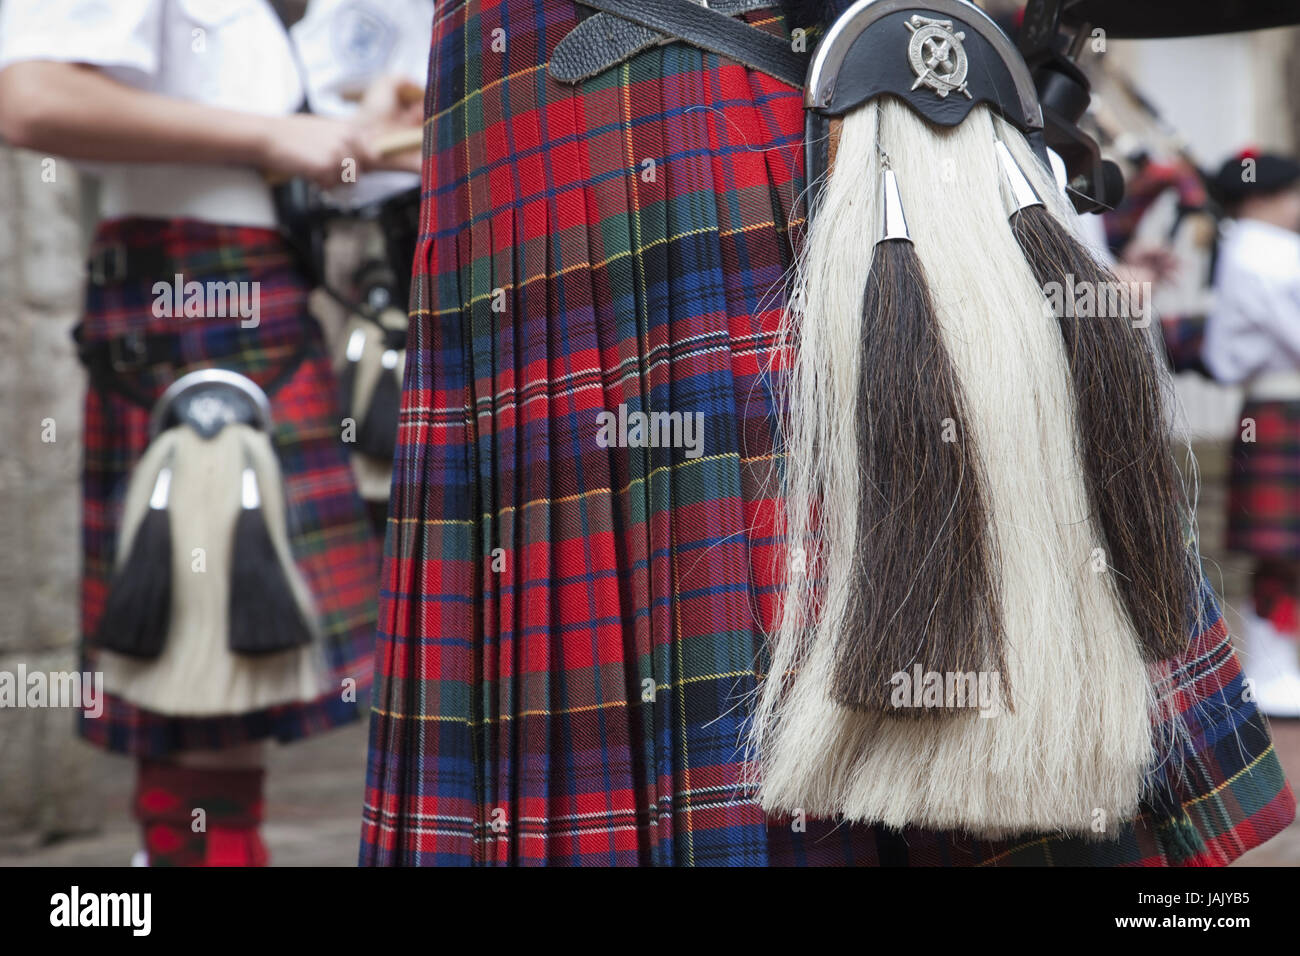 Scotland,Edinburgh,The royal Mile,man,kilt and Sporran,medium close-up,detail, Stock Photo